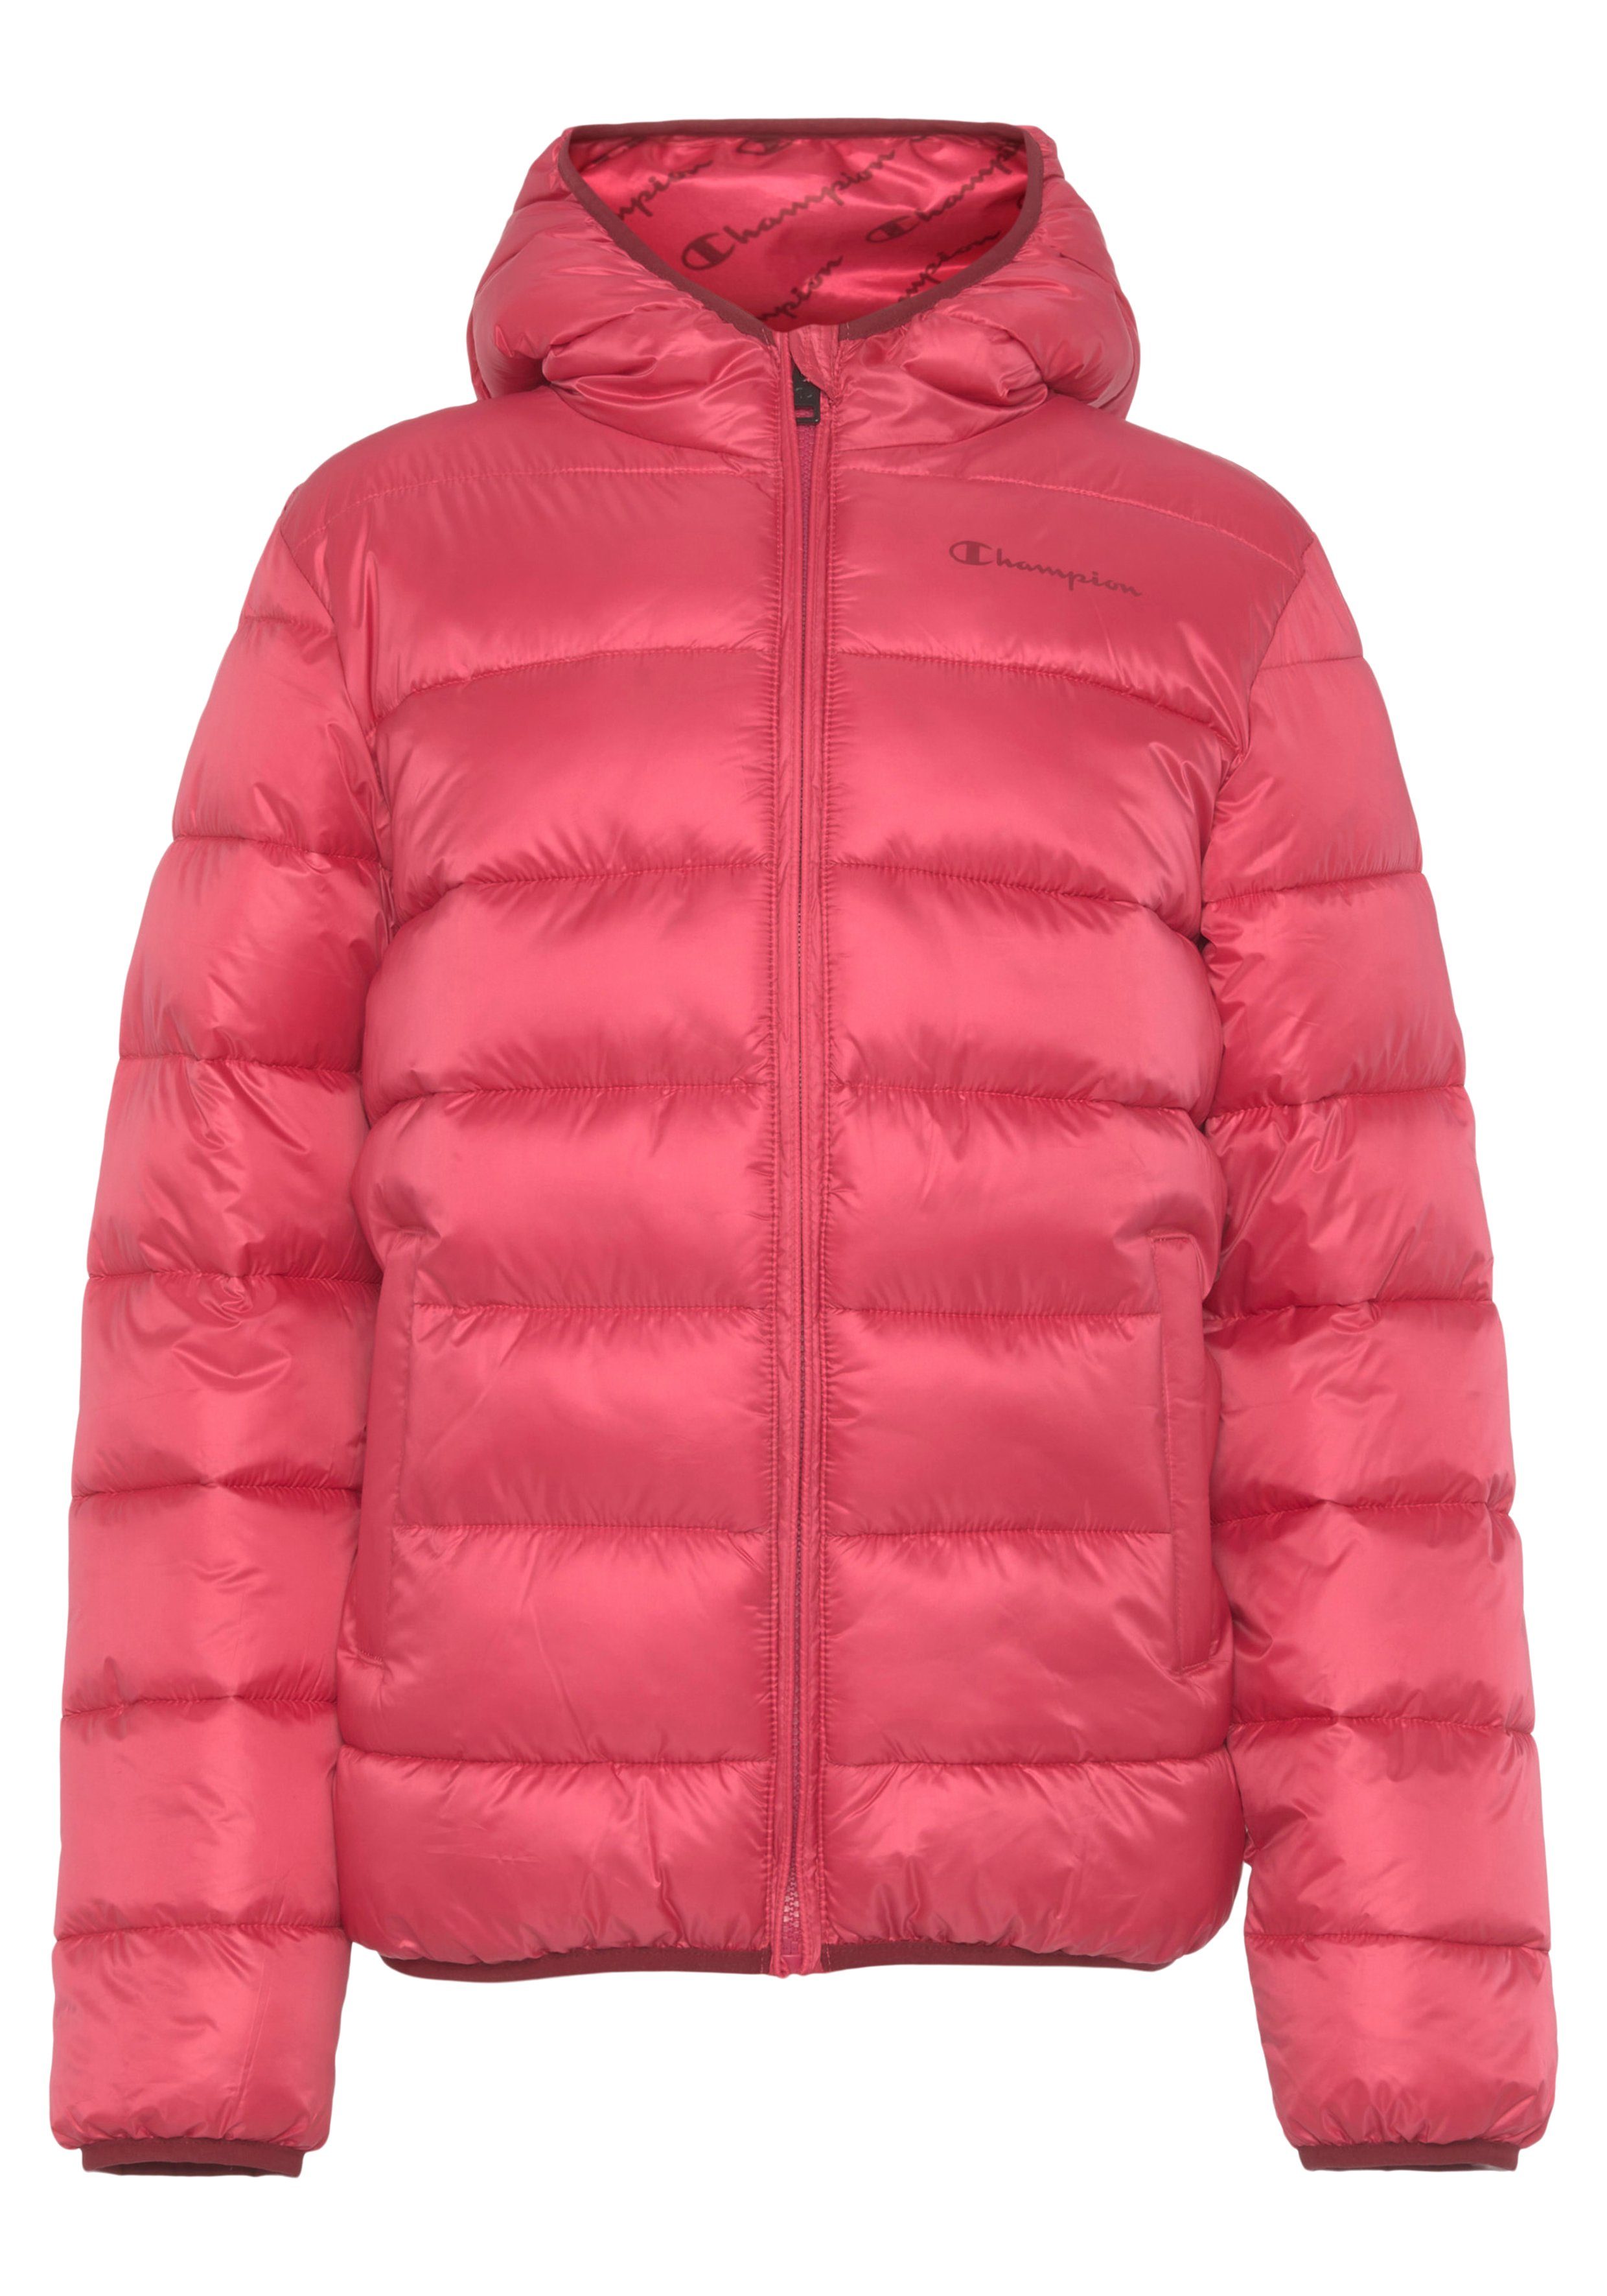 Steppjacke Outdoor Jacket pink Champion - Kinder für Hooded